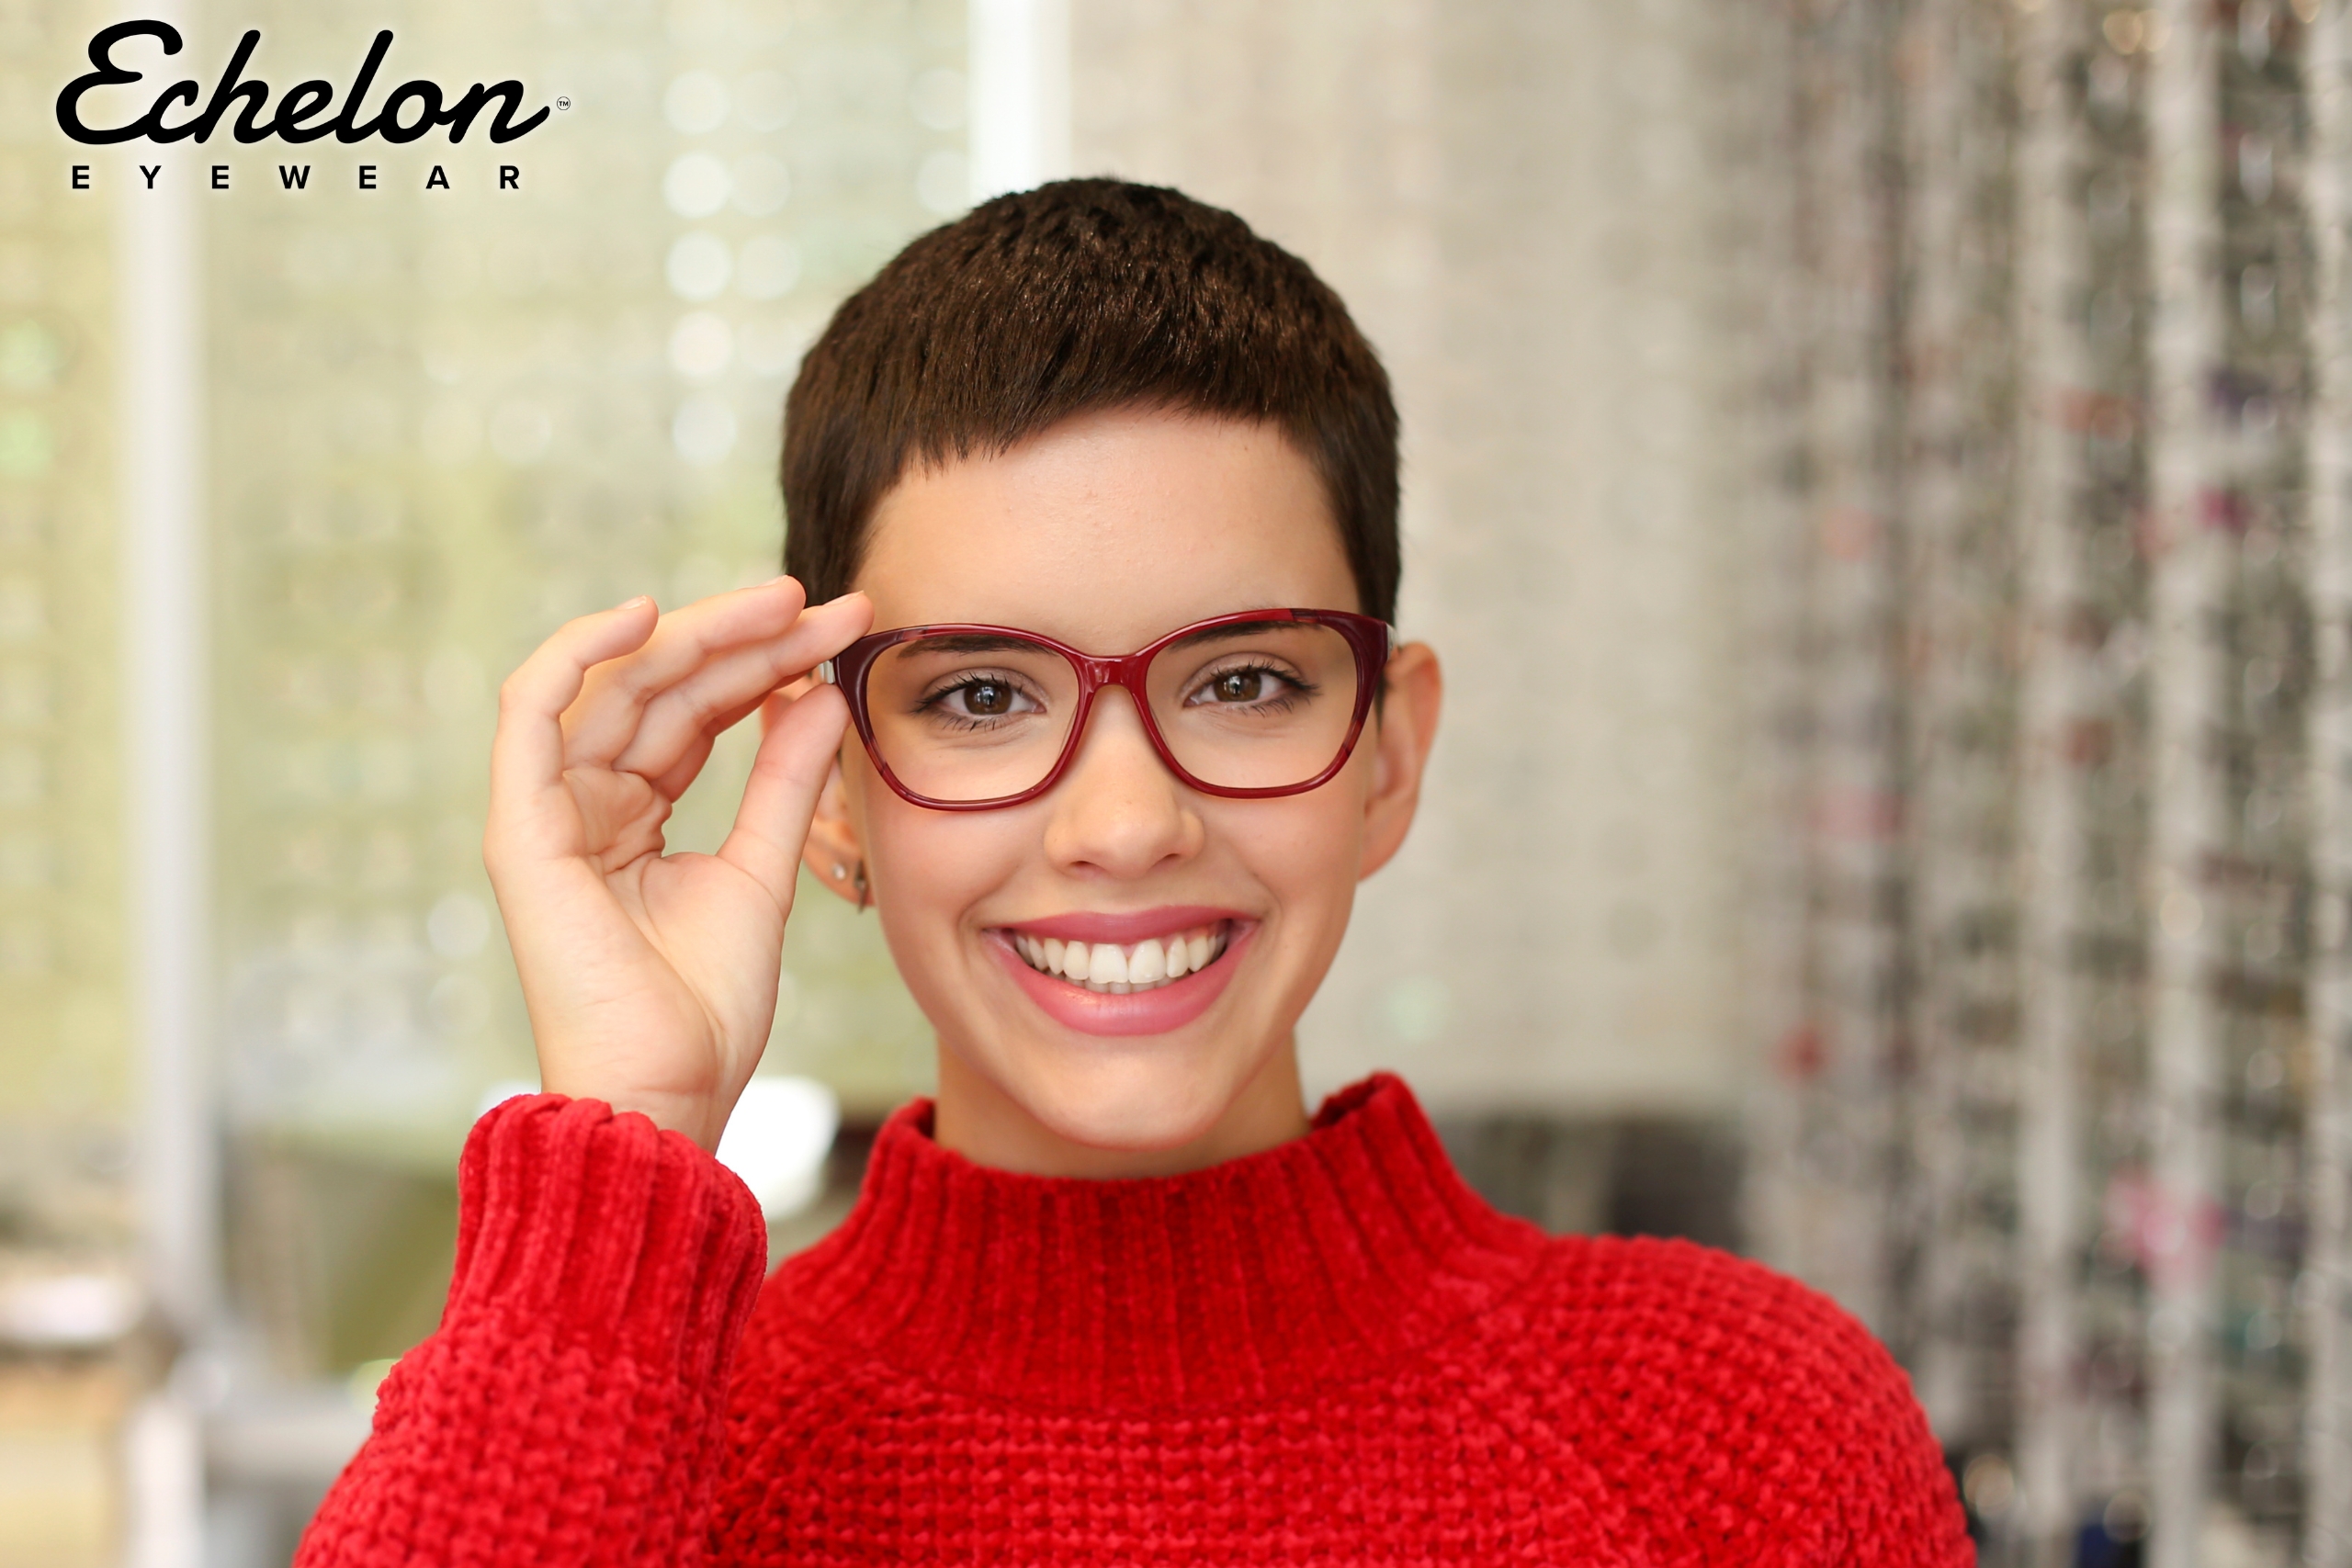 Accessorise Your Look: Enhance Your Style With Echelon Eyewear